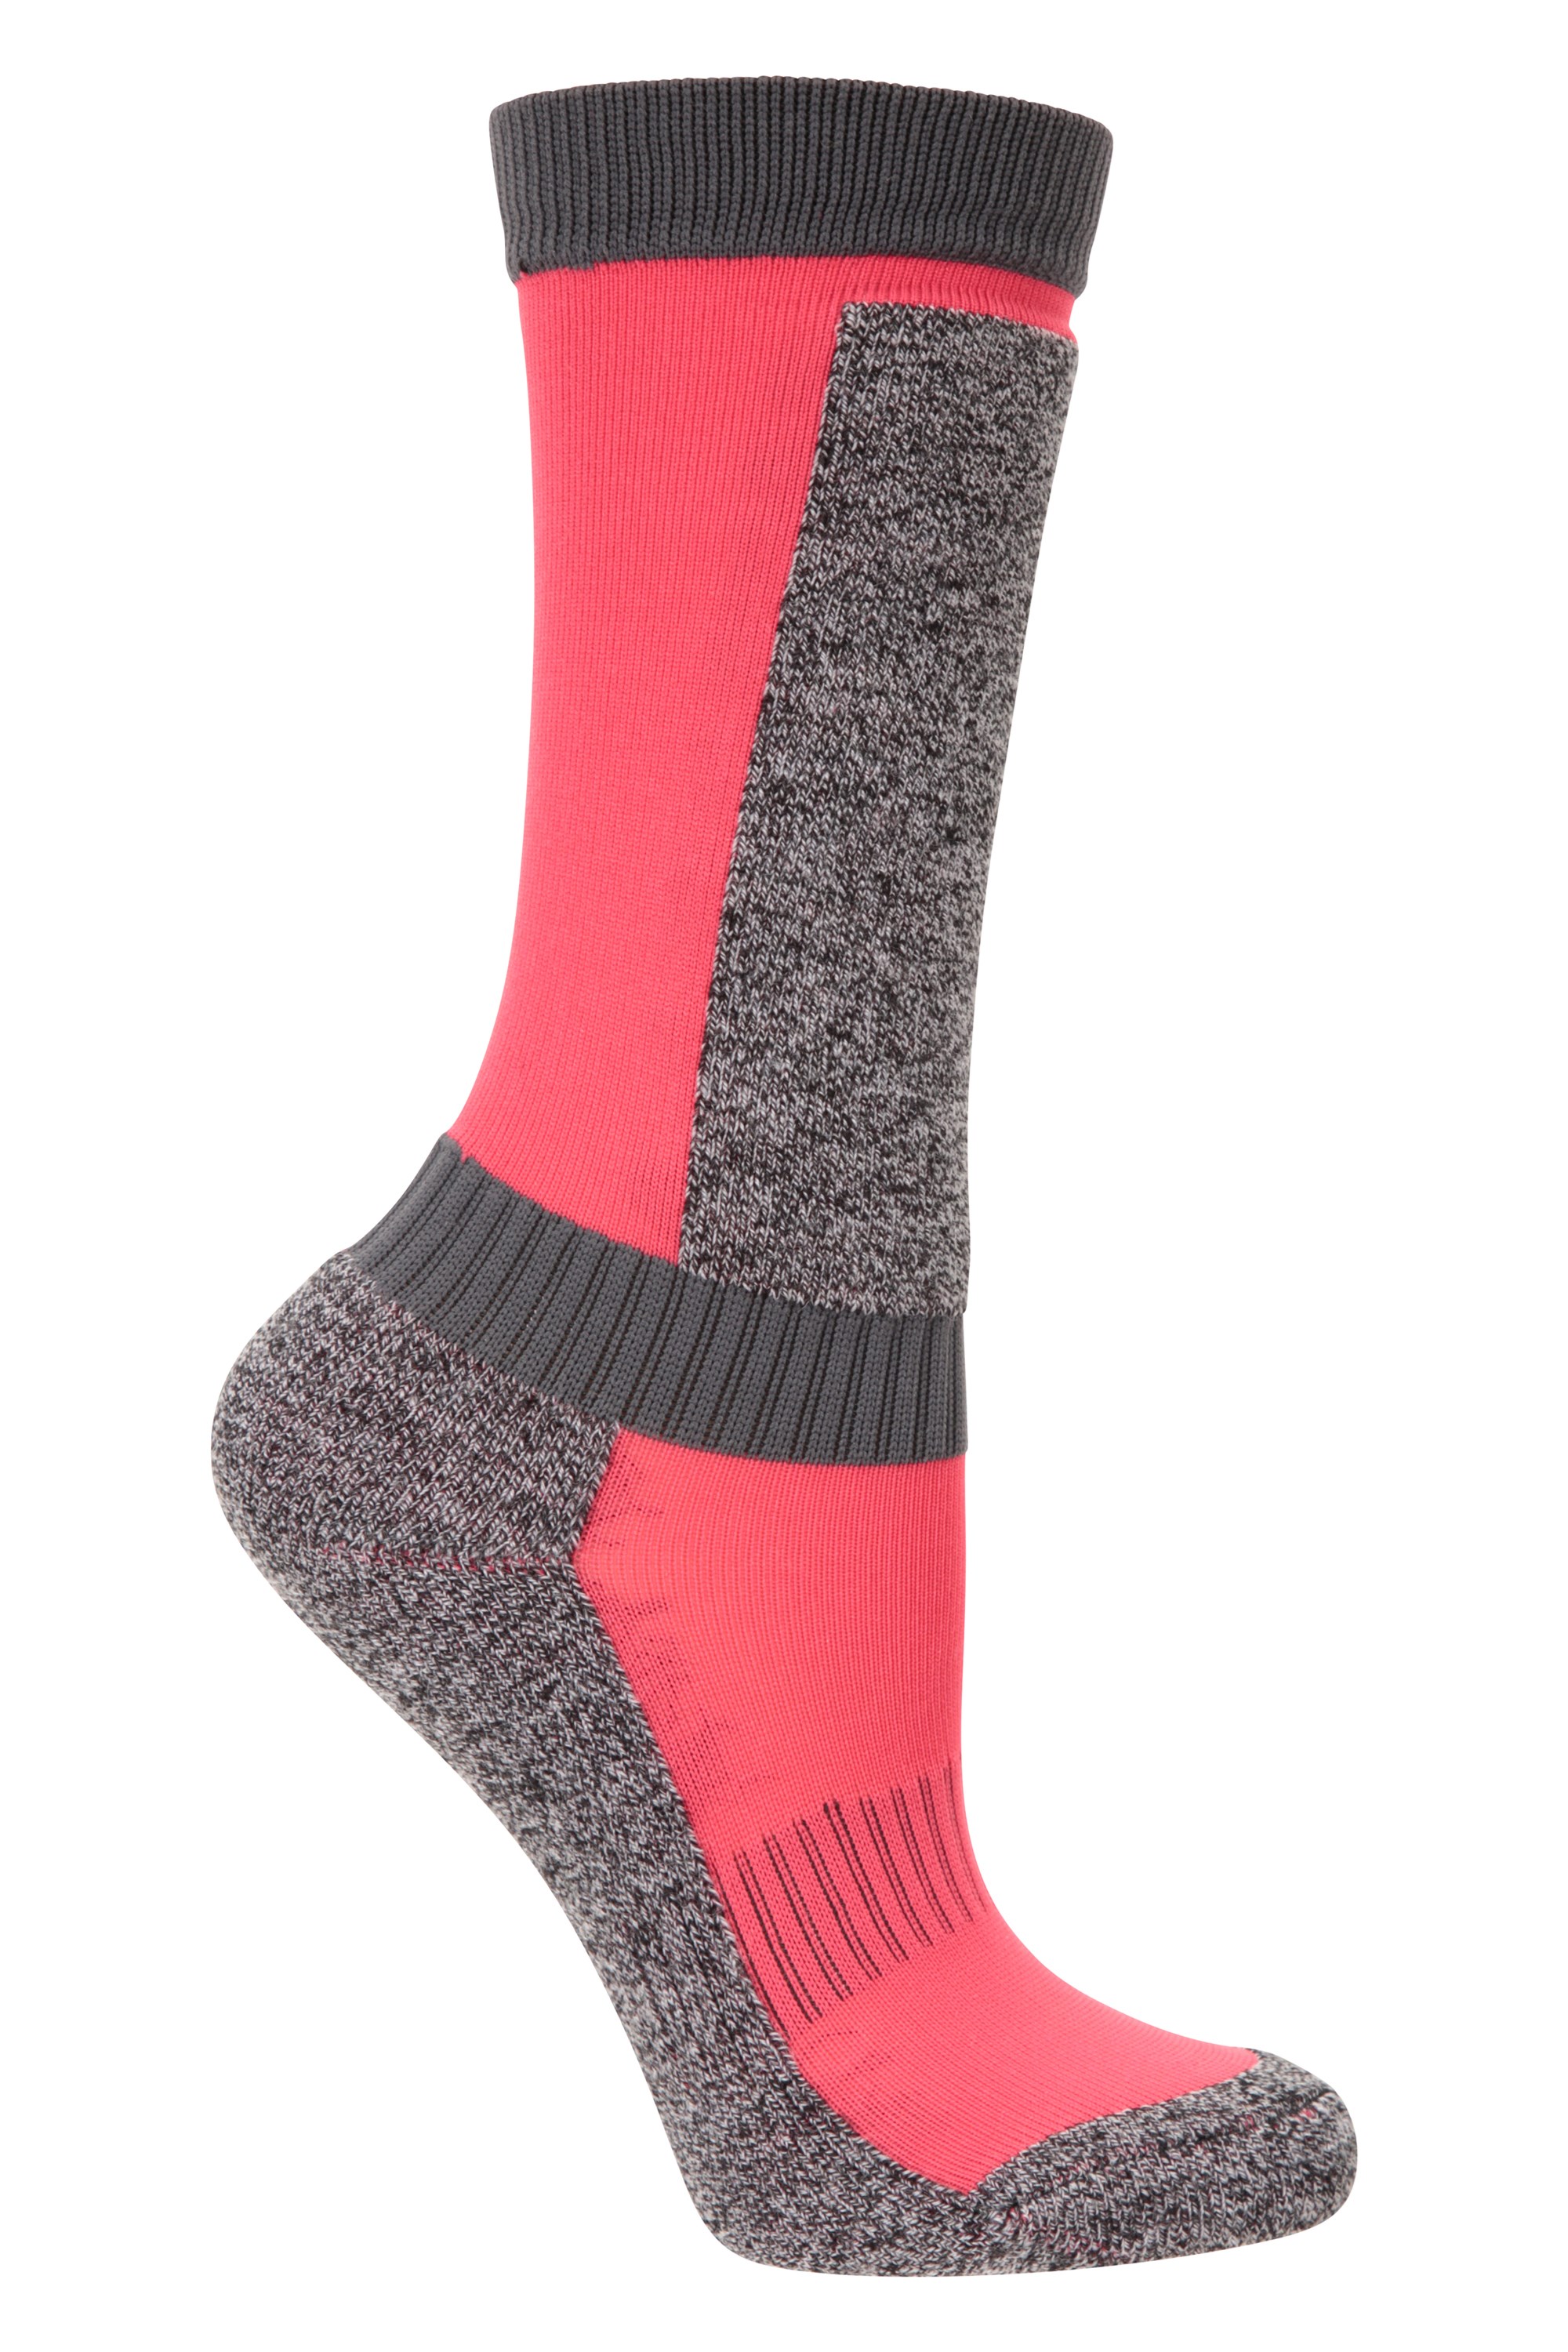 Lightweight Snowboarding Socks Best for Winter Sports Bright Orange 7-11 Mountain Warehouse IsoCool Mens Ski Socks Sweat Wicking Breathable